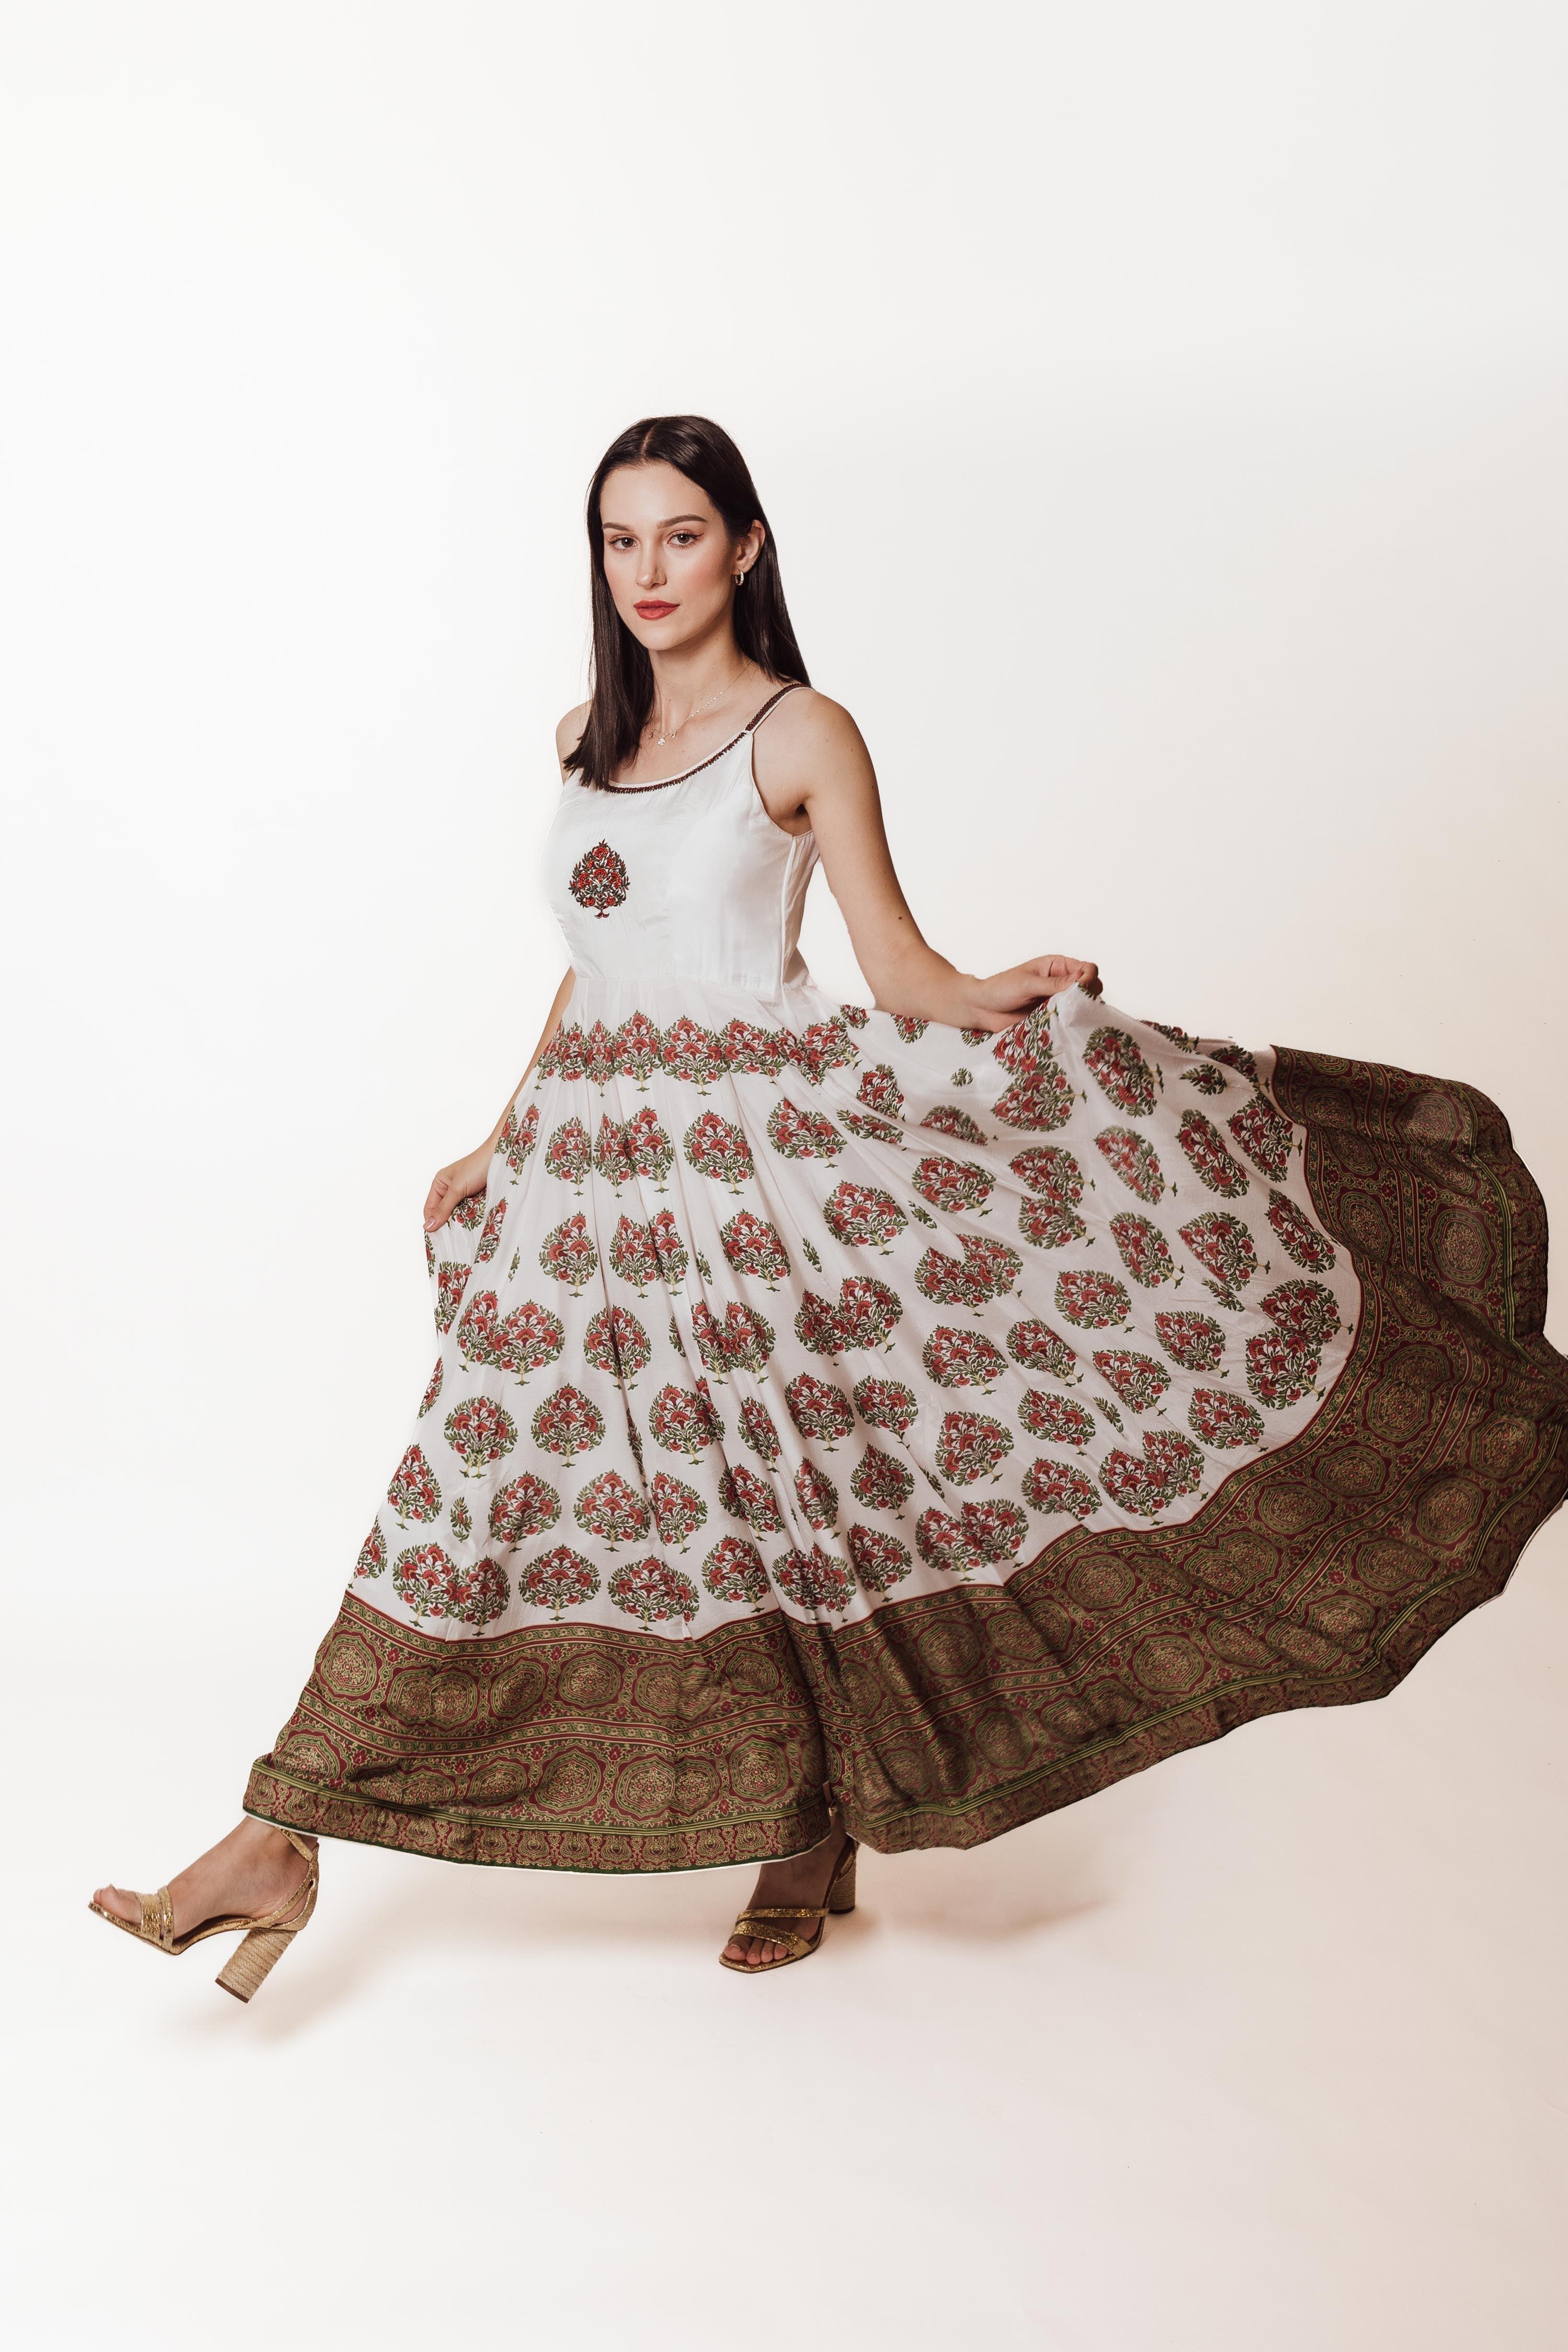 BUY THE LATEST DESIGNER ETHNIC DRESSES FOR WOMEN AT AFFORDABLE PRICE –  Rajkumari: Clothing Brand for Women & Girls in India